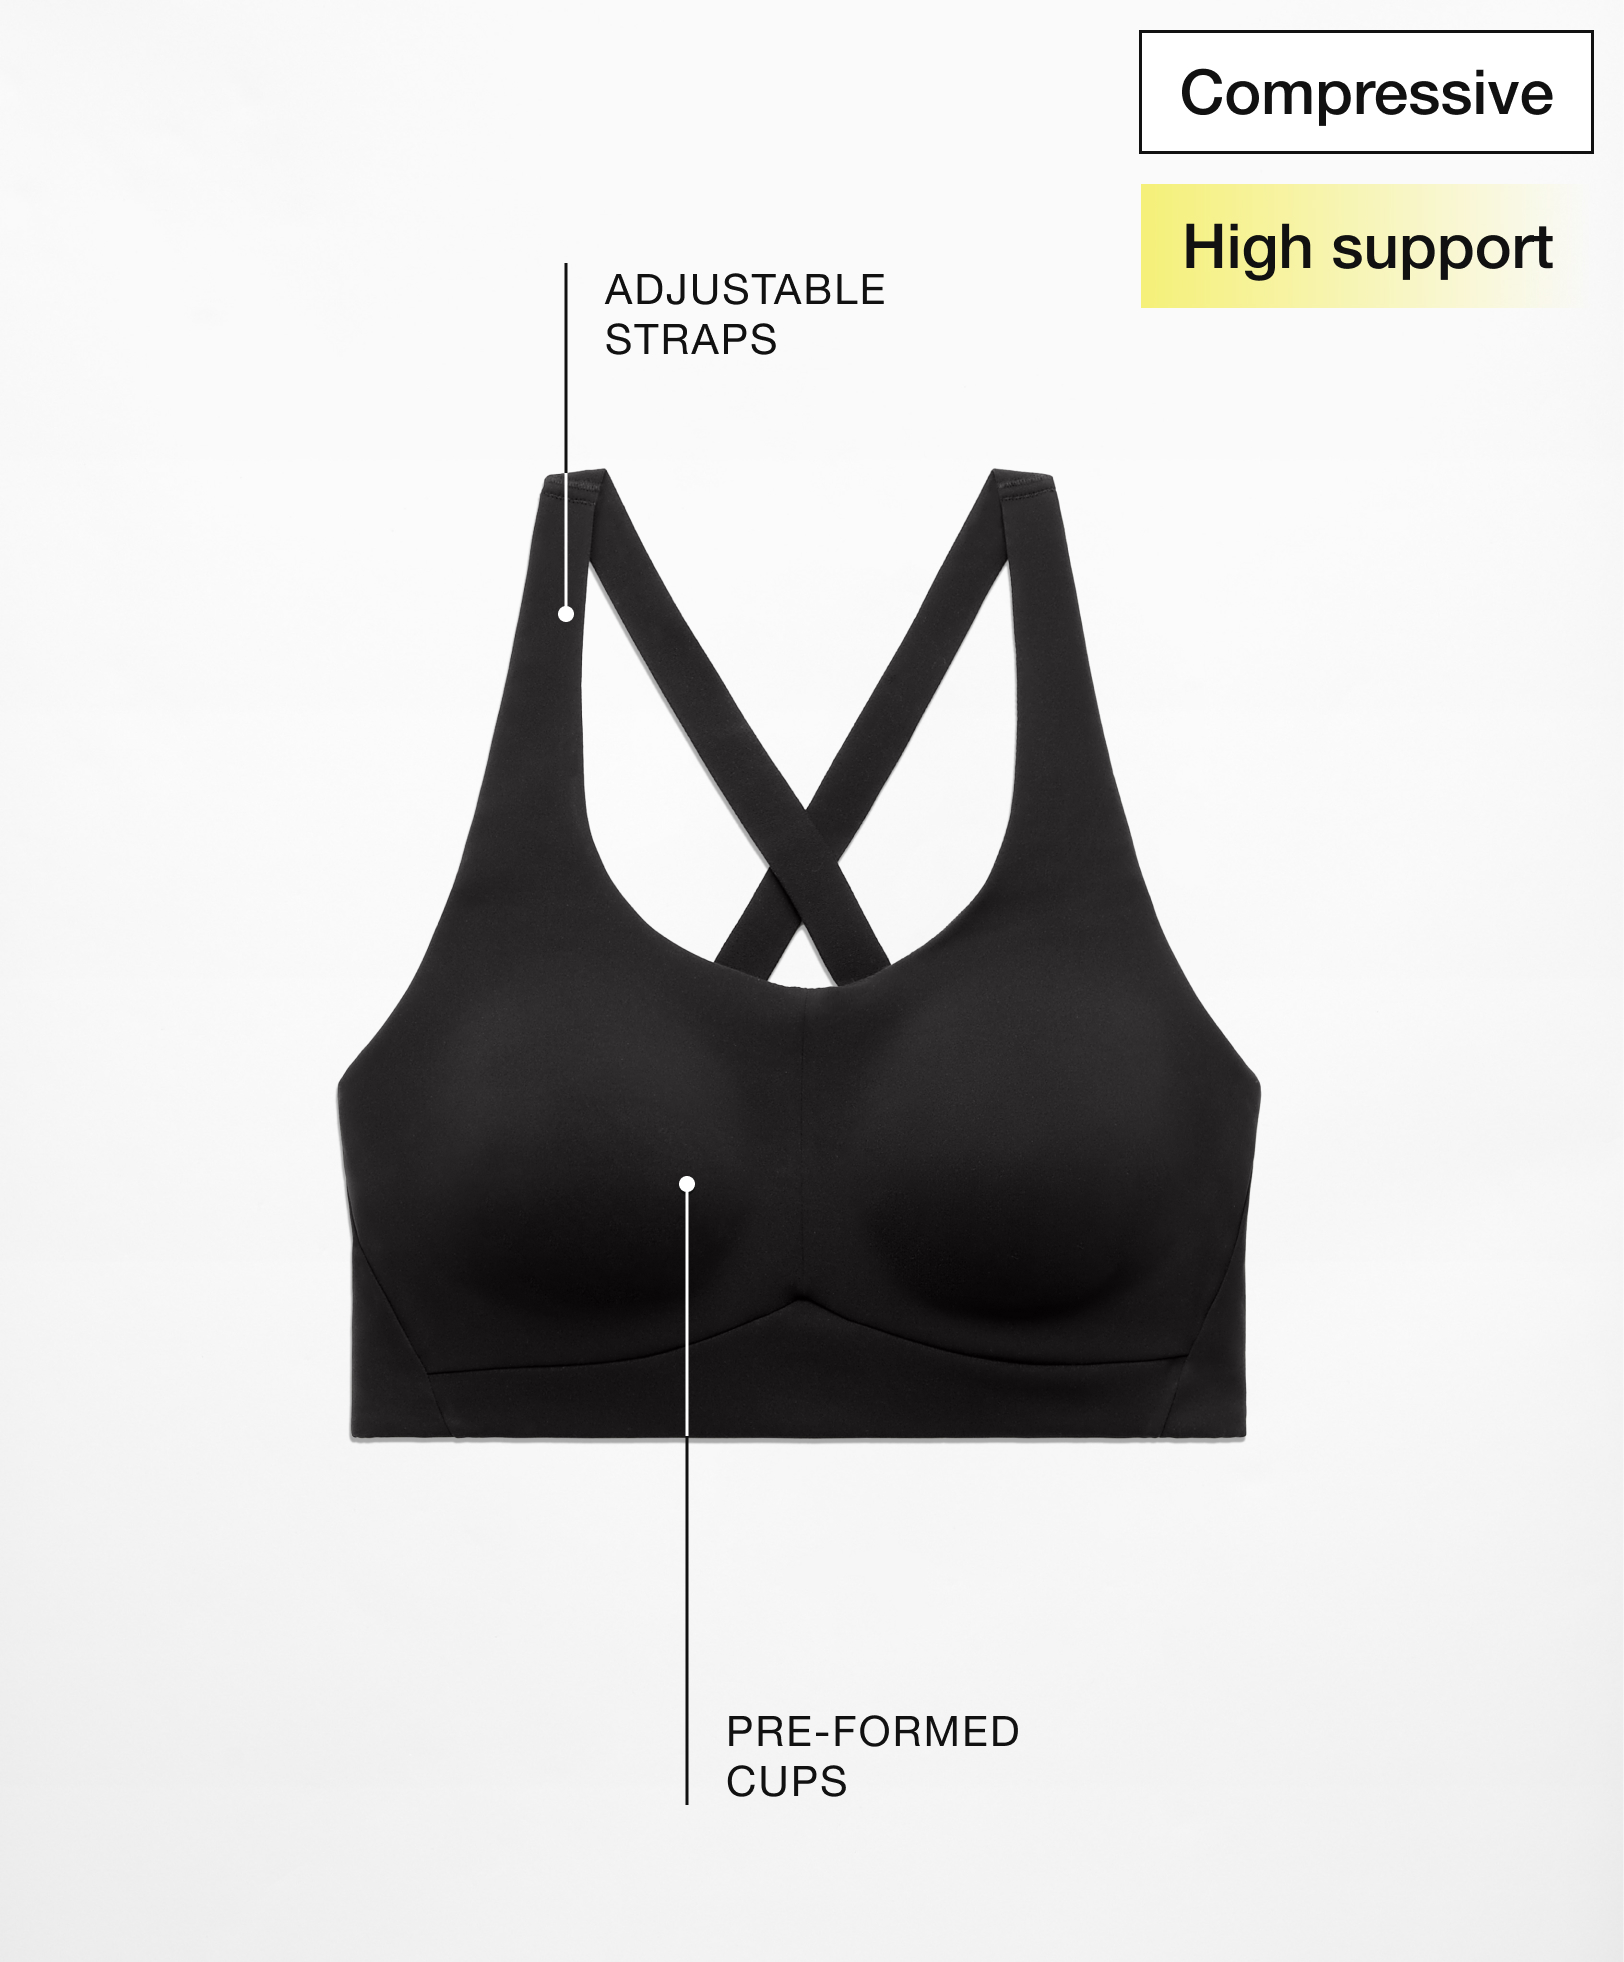 Firm support compressive sports bra